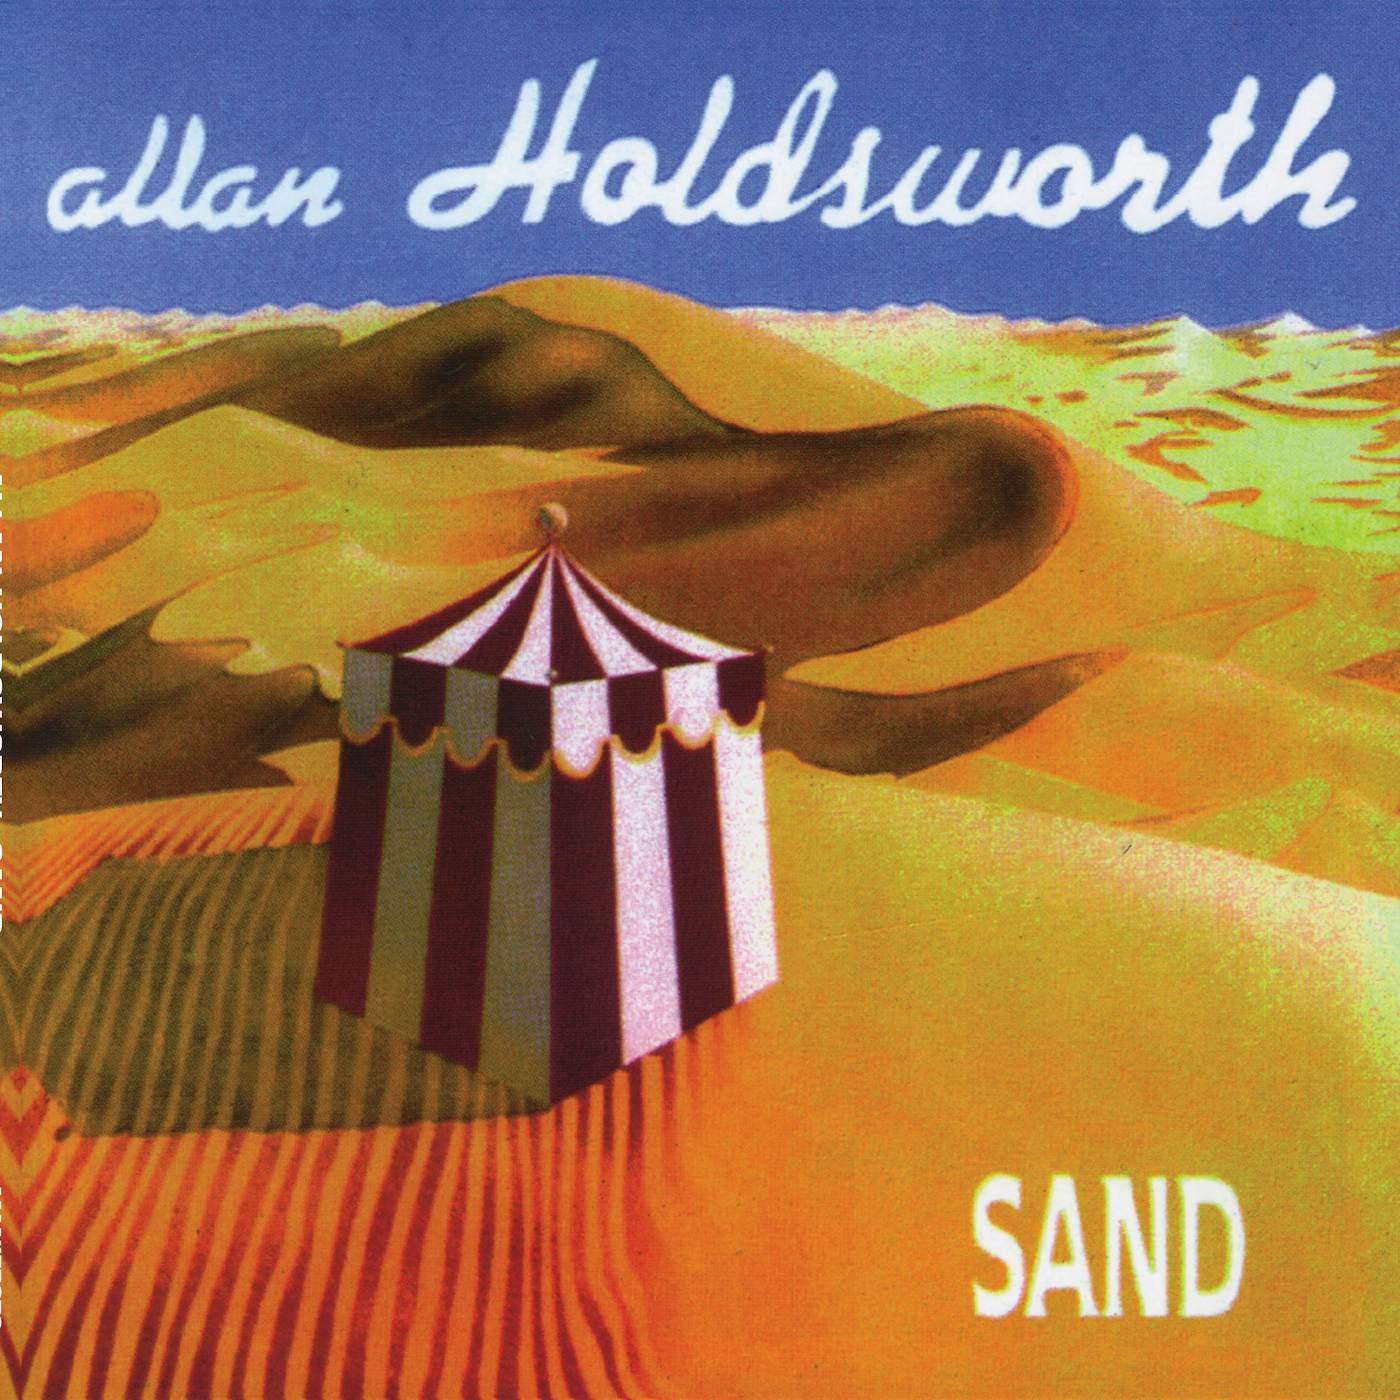 Allan Holdsworth SAND CD